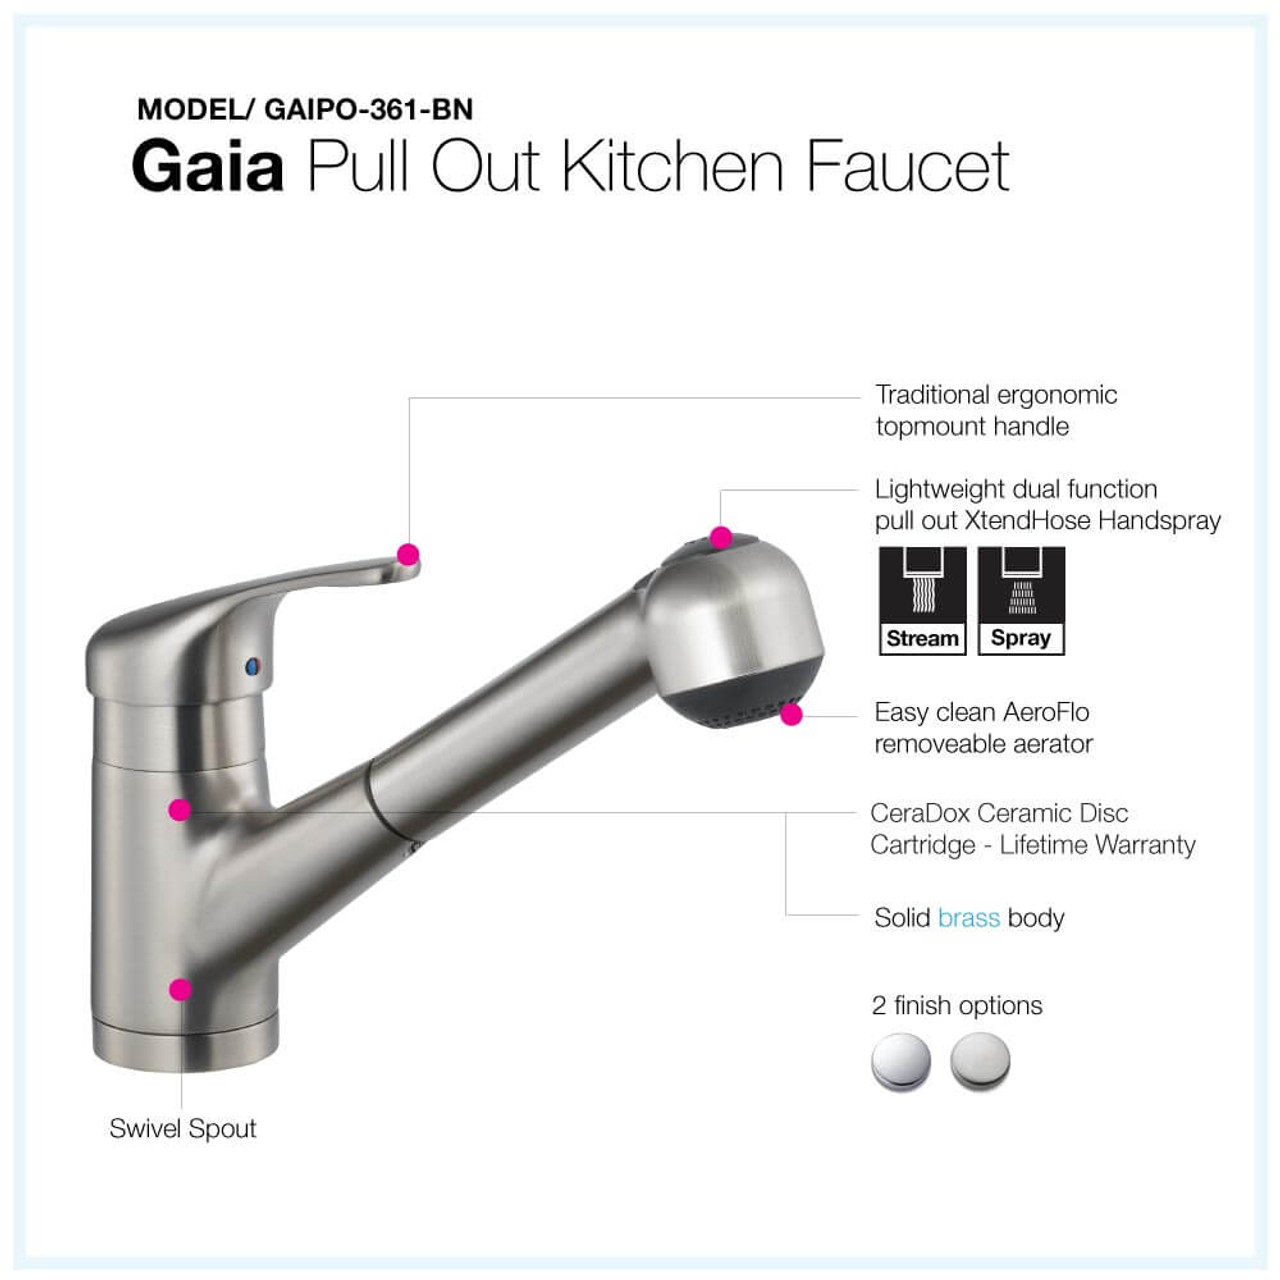 Instalando Porta platos metálico, How to install kitchen accessories 